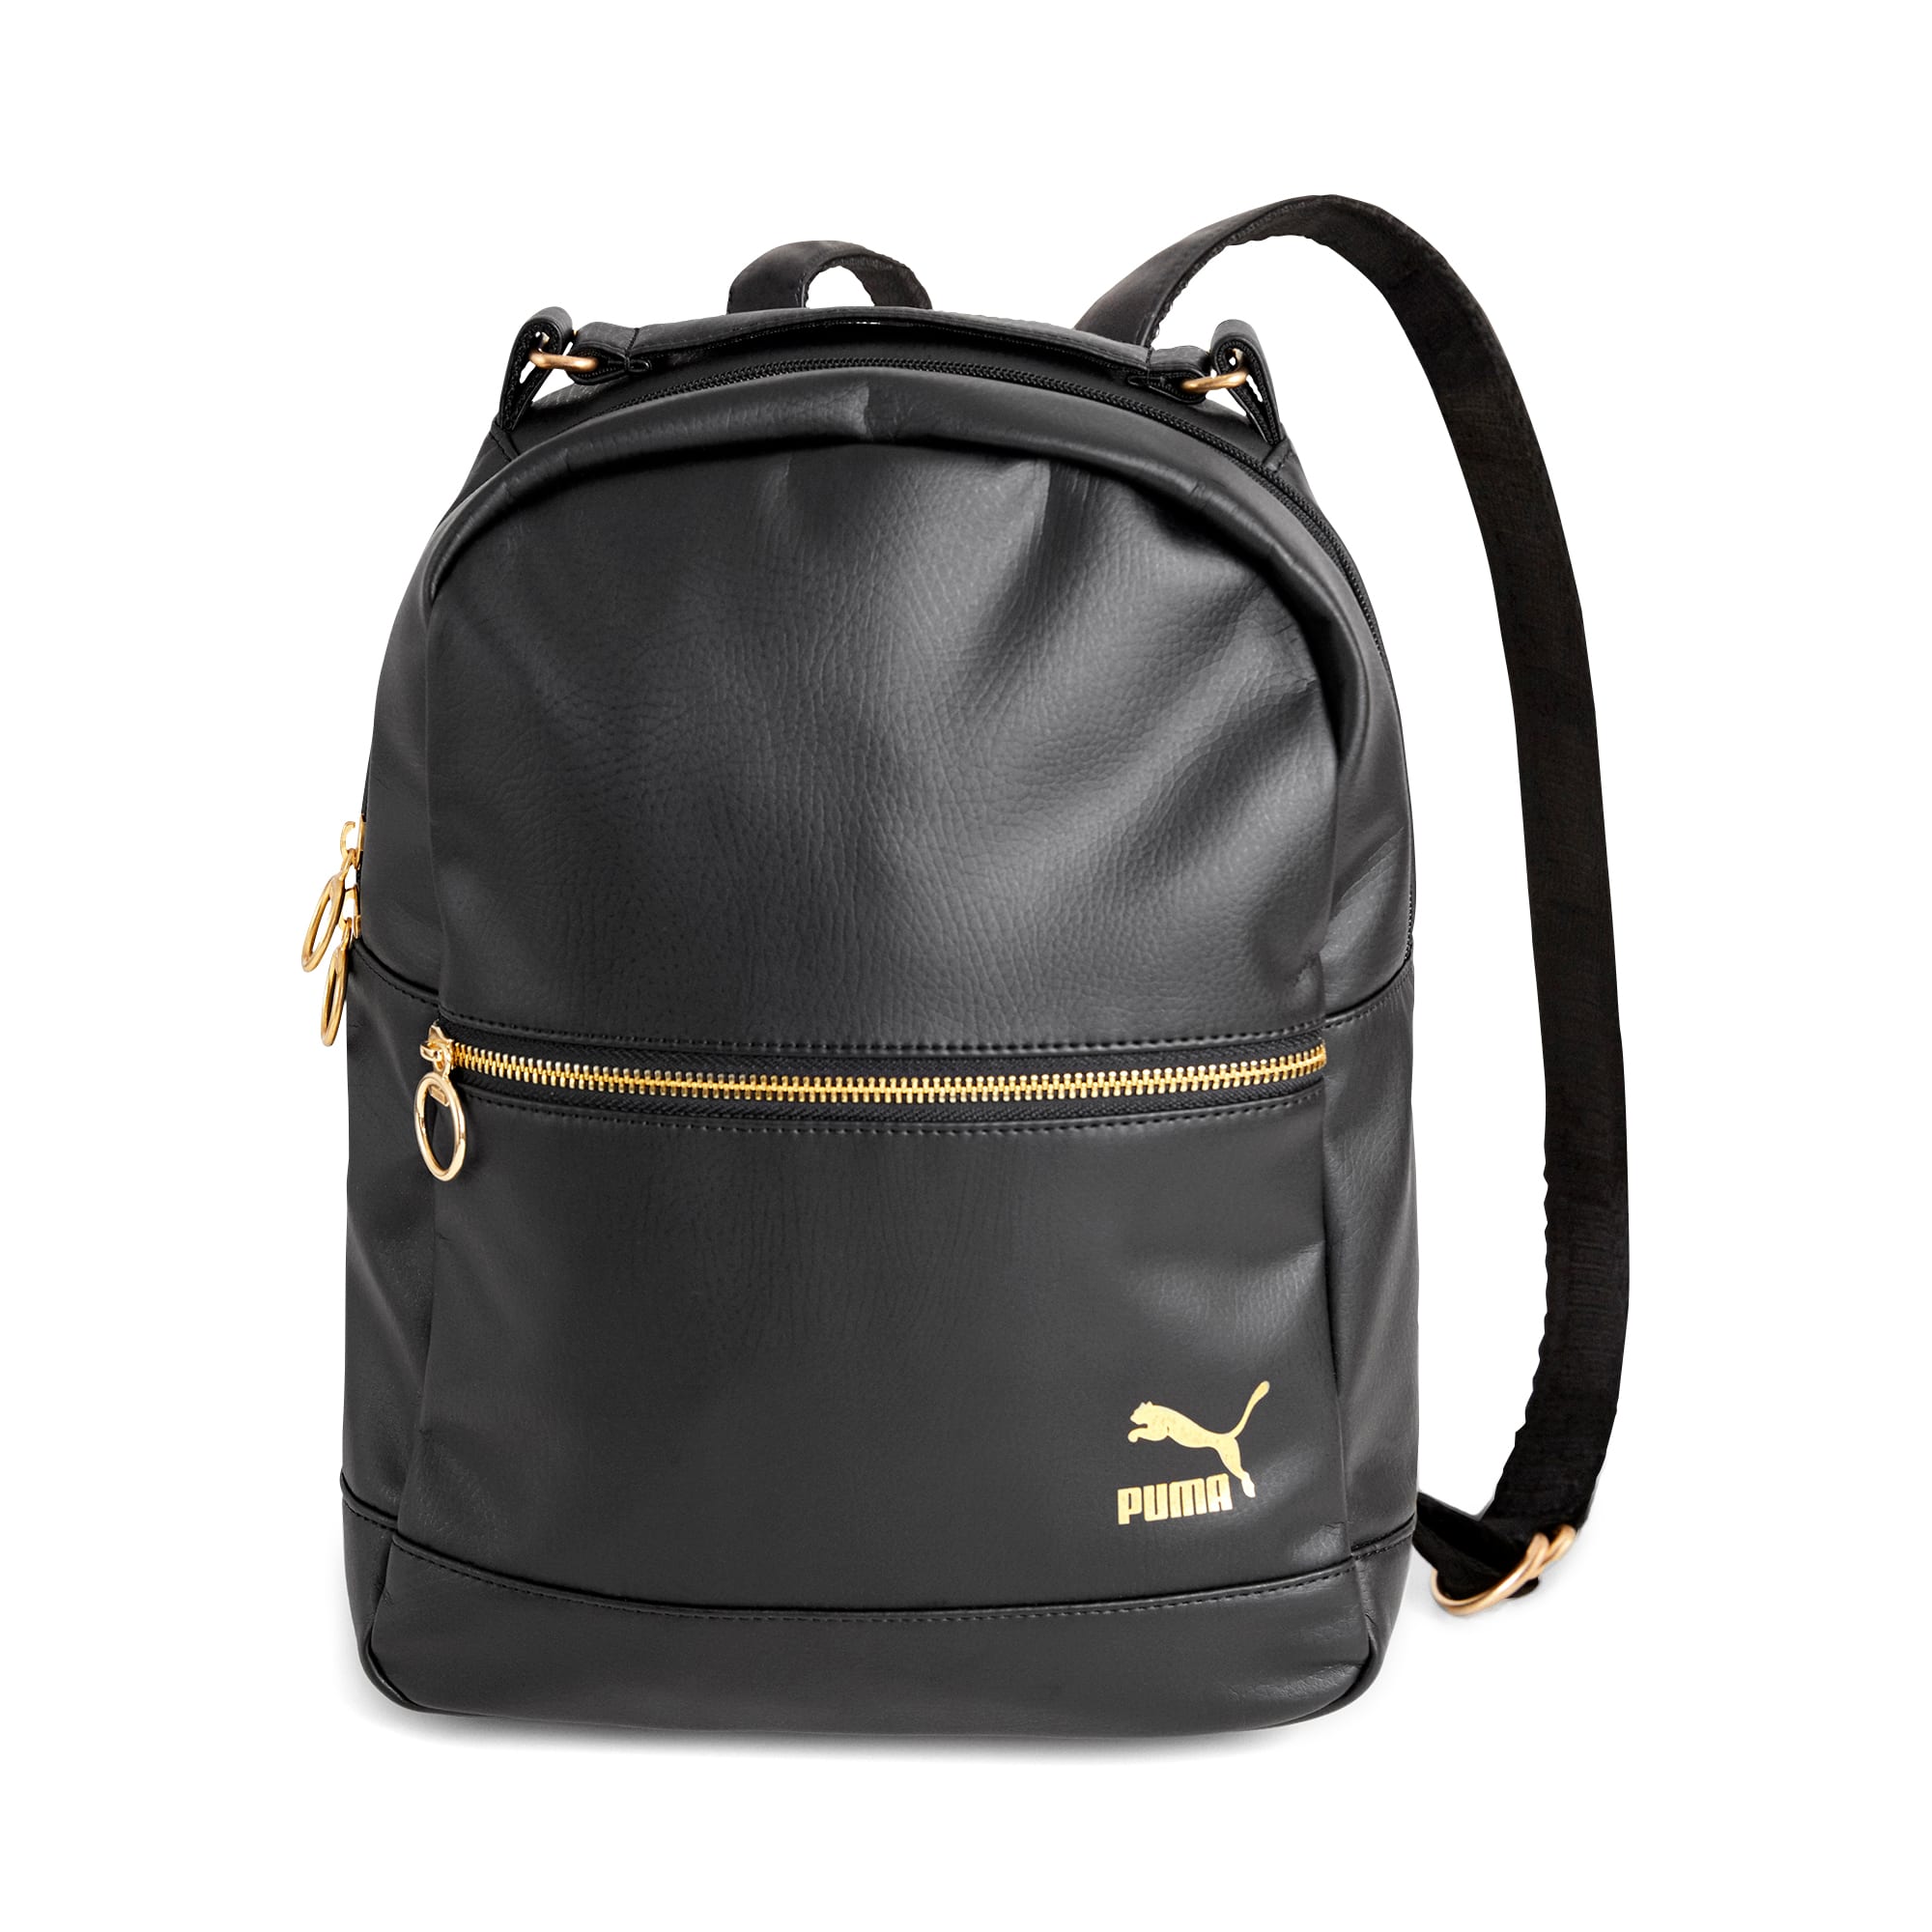 PUMA x KENZA Lux Women's Backpack 